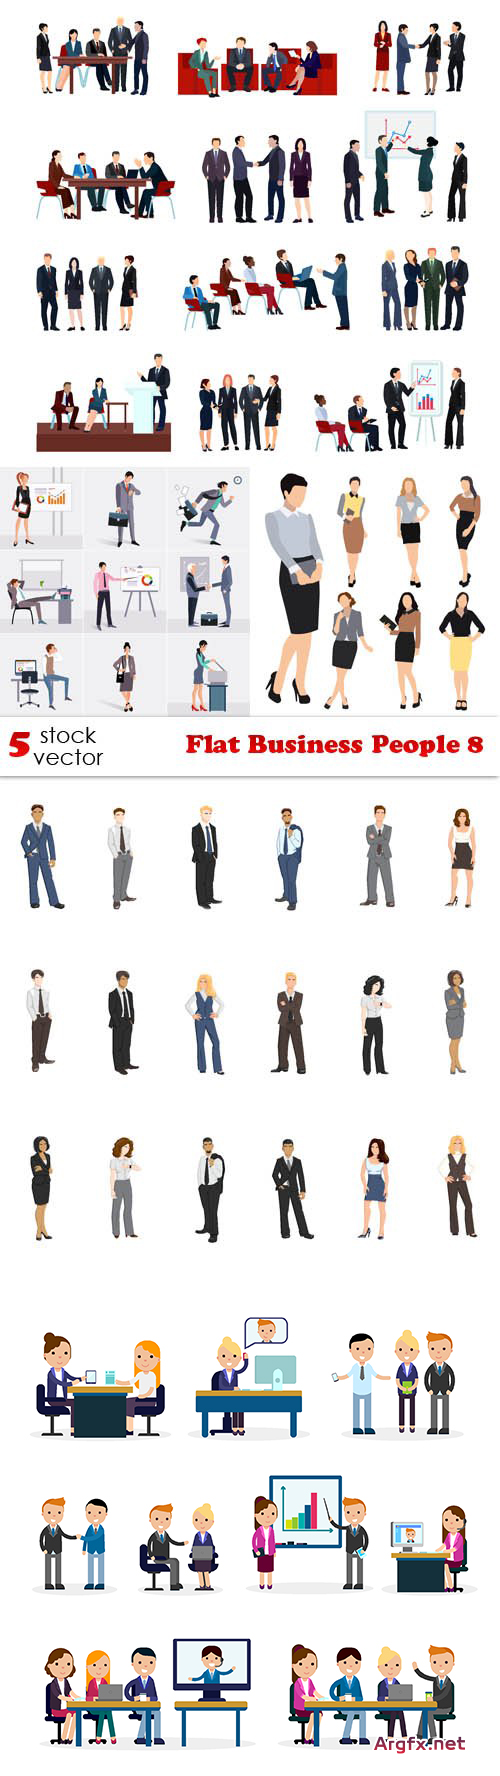 Vectors - Flat Business People 8